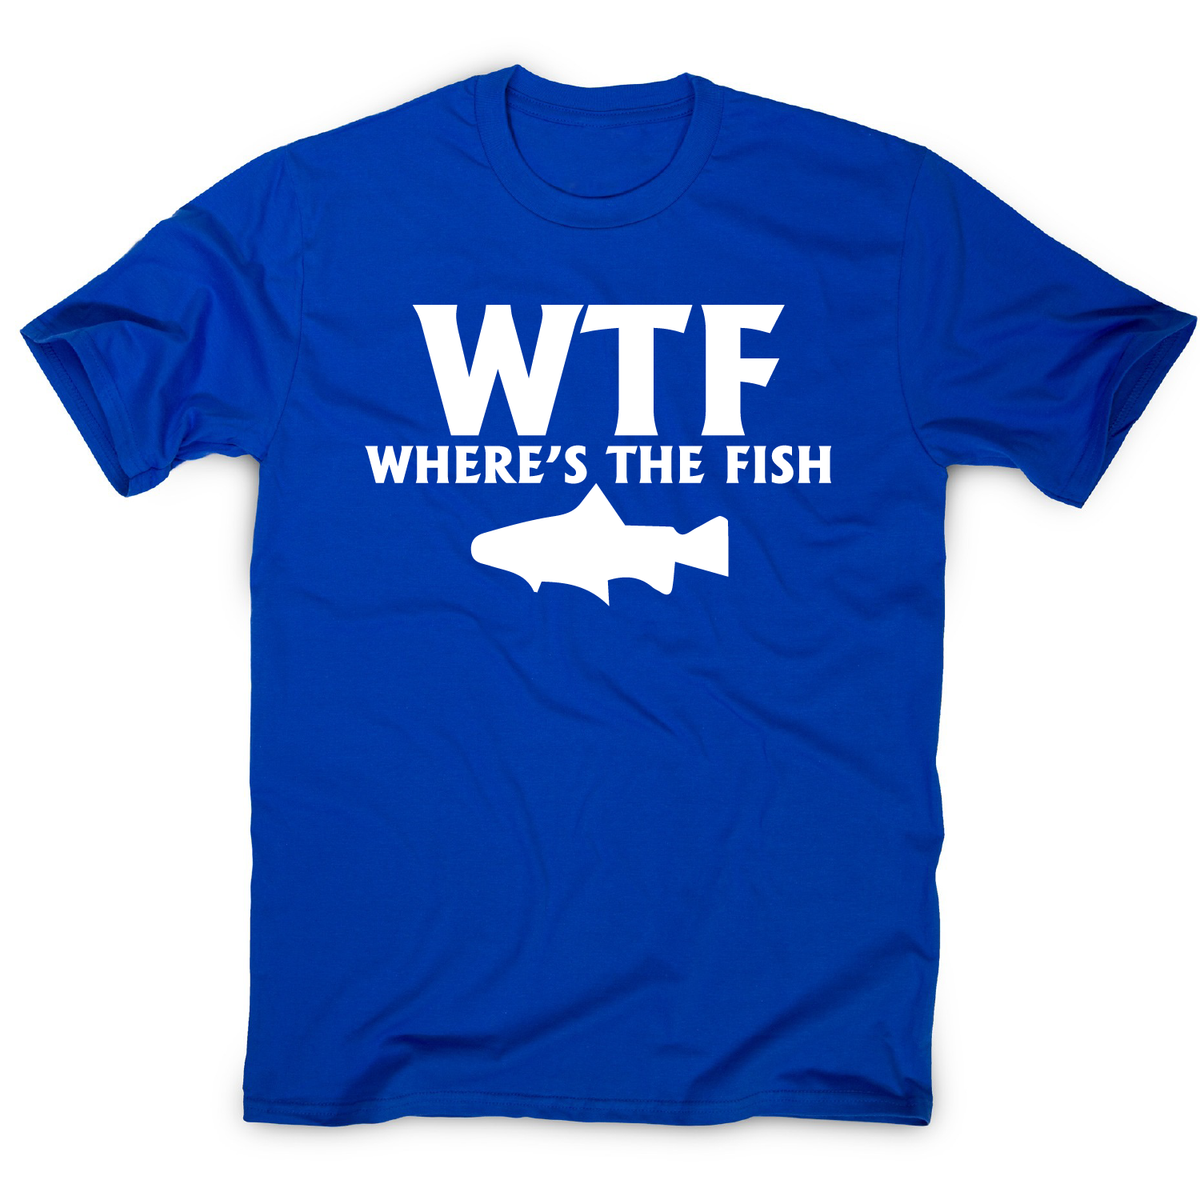 Crazy Dog T-shirts Mens Beer Fishy Fishy Tshirt Funny Fishing Drinking Tee, Men's, Grey